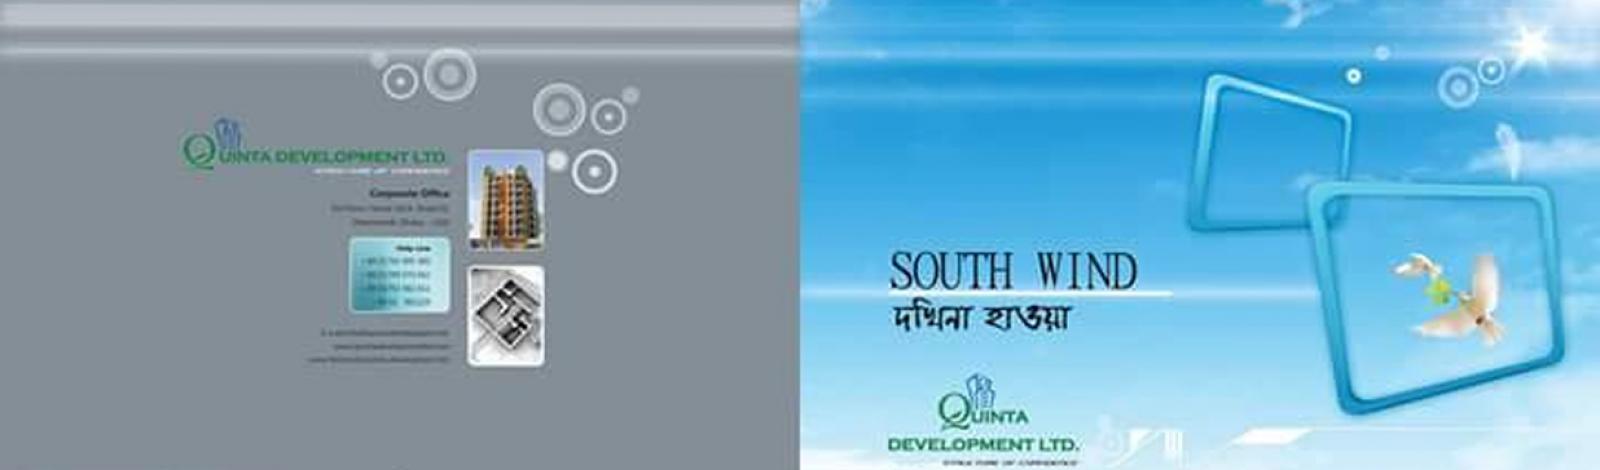 Quinta Development Limited. banner